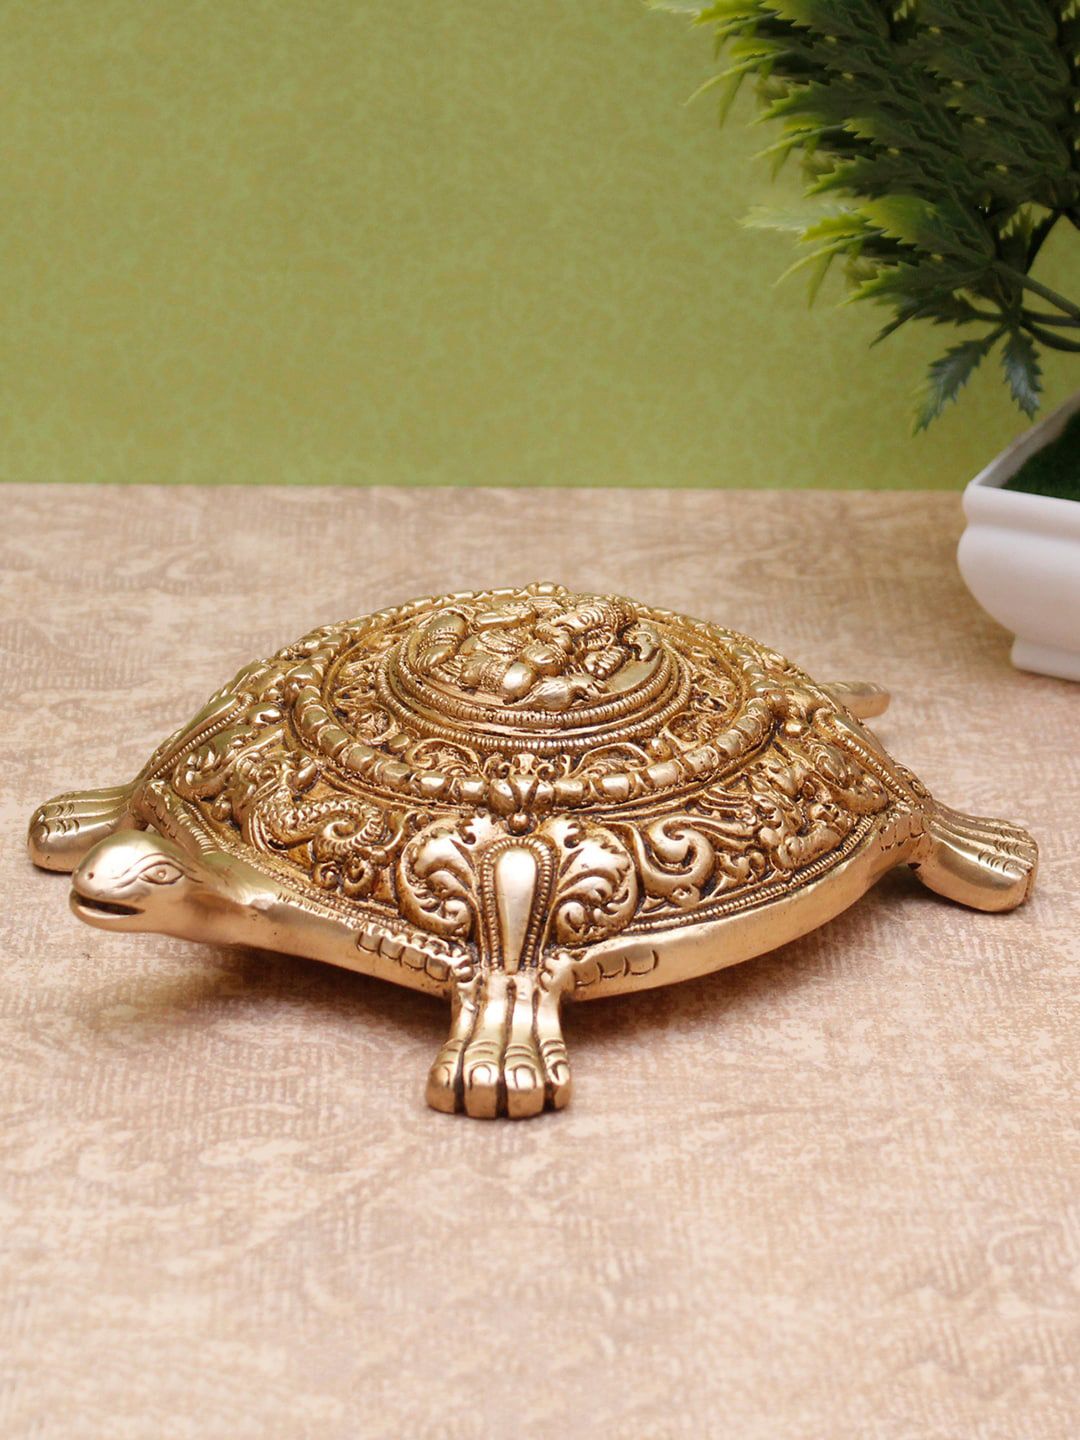 StatueStudio Gold Tortoise Idol Showpieces Price in India